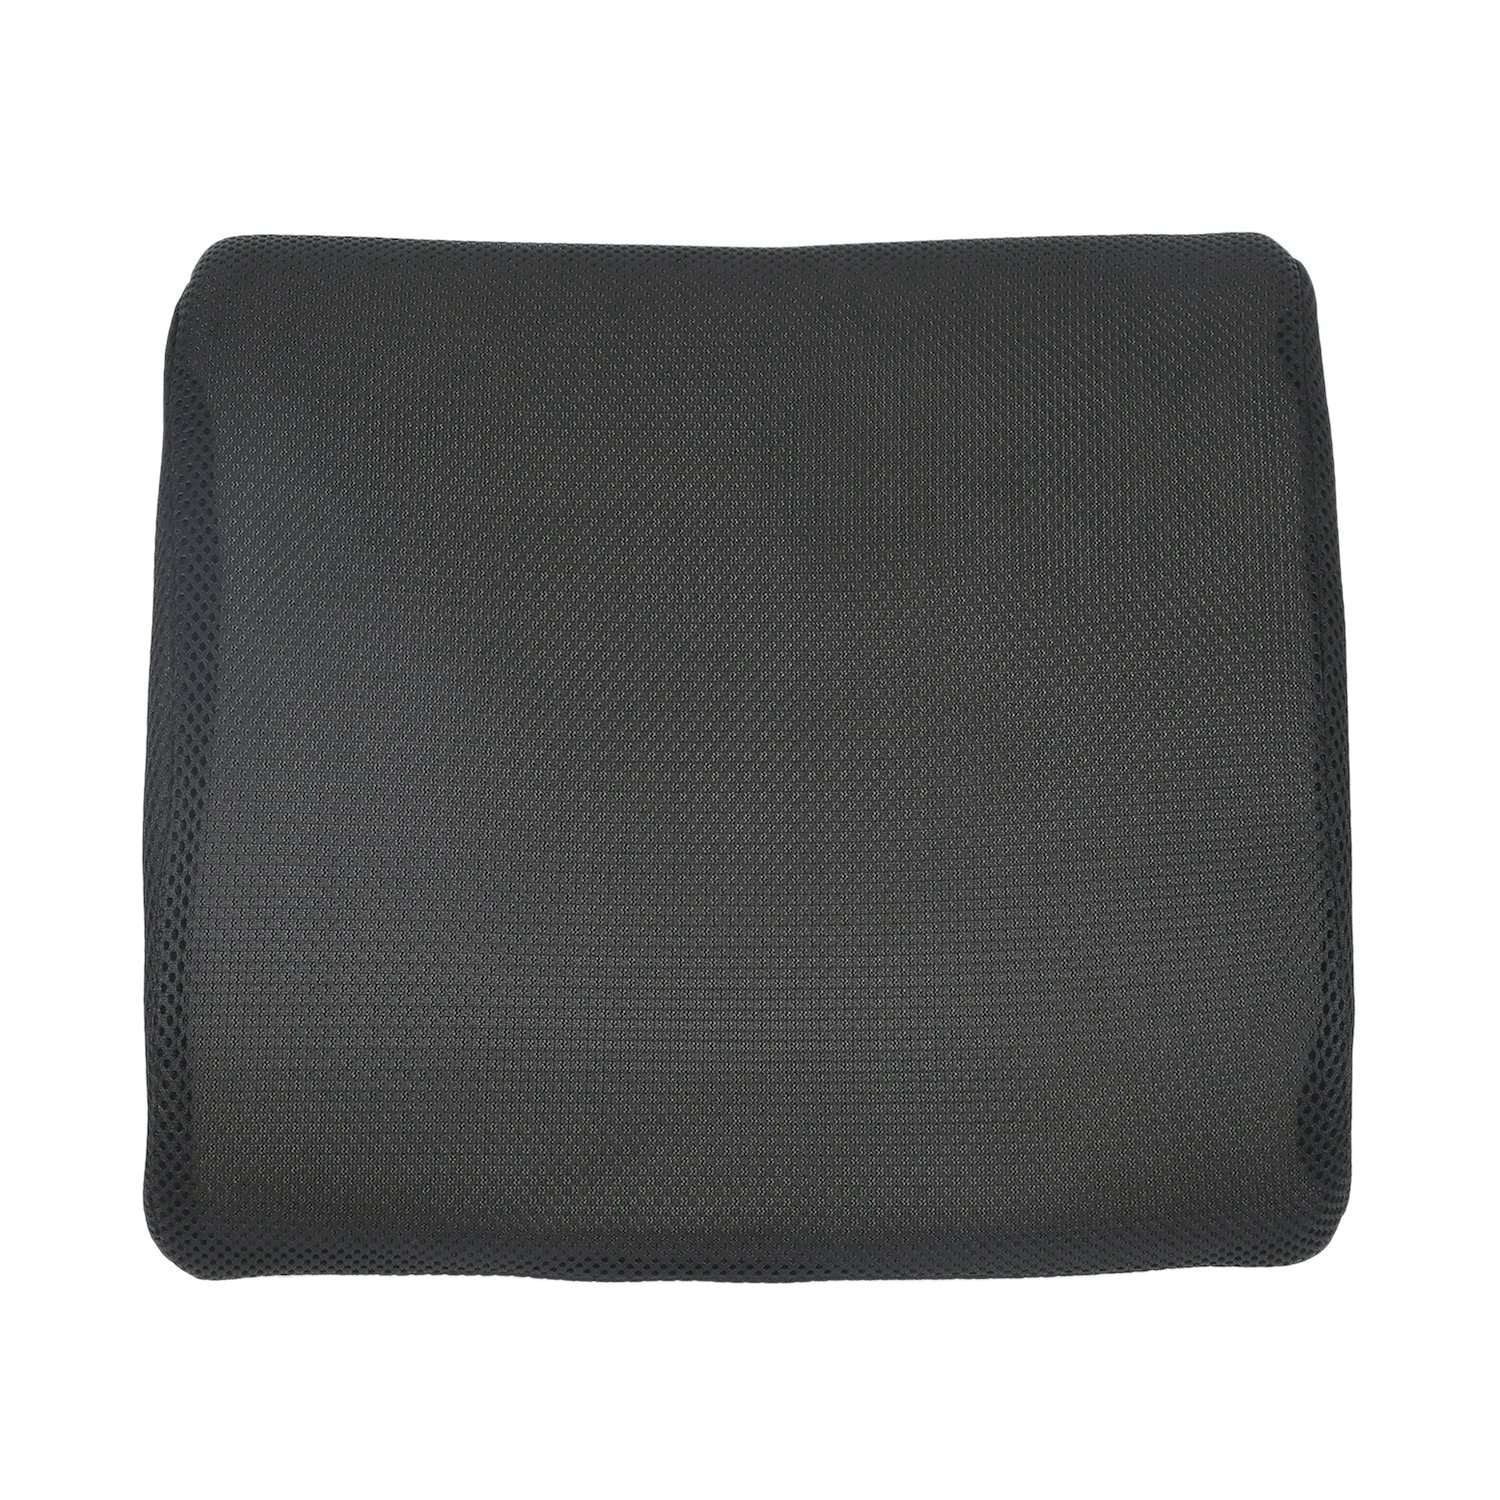 COMFILIFE Memory Foam Support Back Pillow Black R-LU-BLK - The